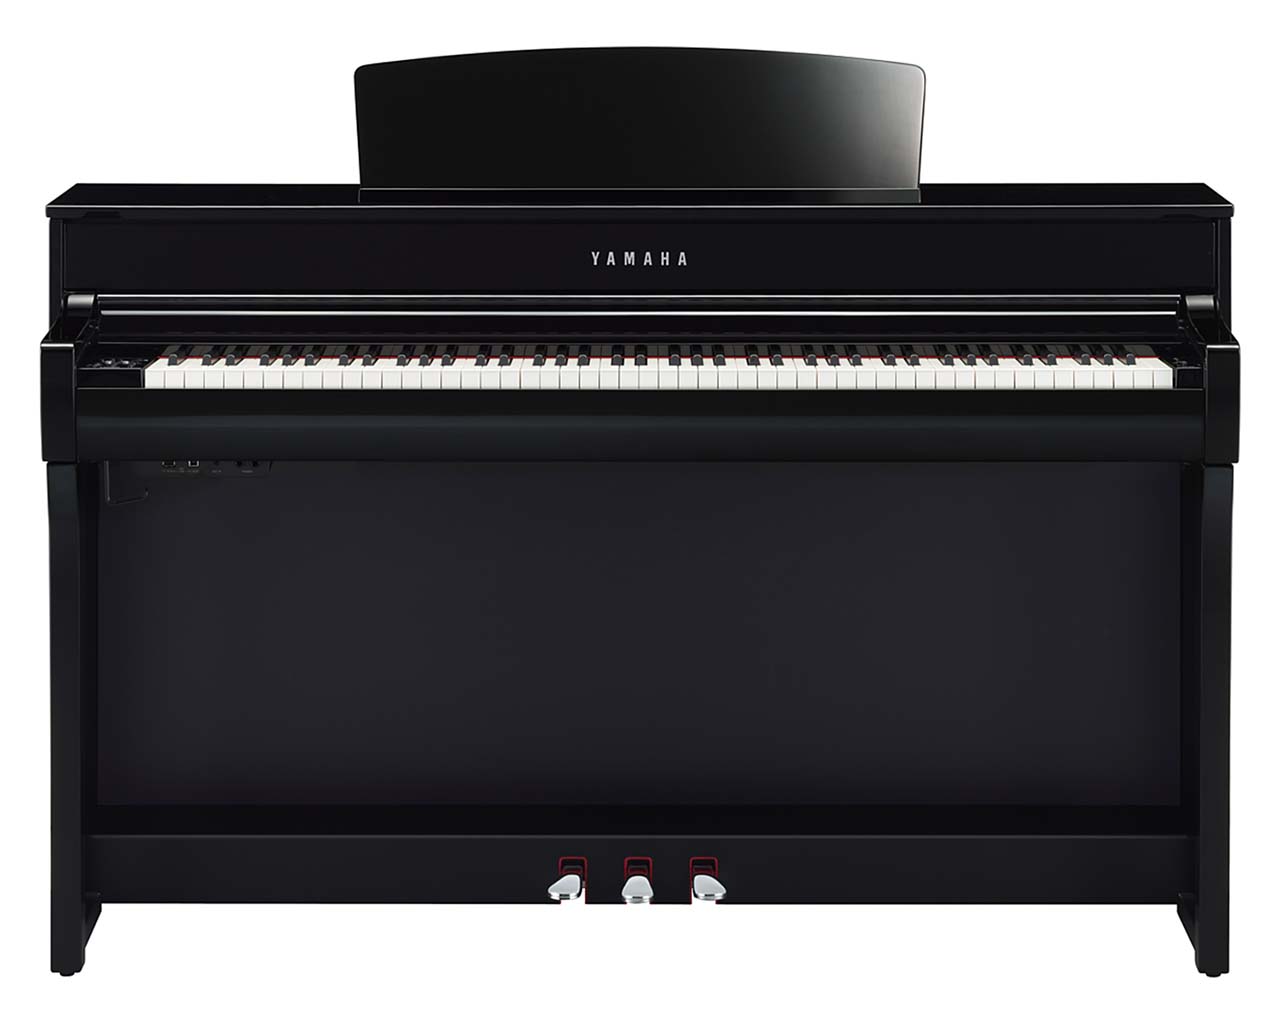 Yamaha-Clavinova-CLP-745-PE-Digitalpiano-schwarz-poliert-Front-Pianohaus-Filipski